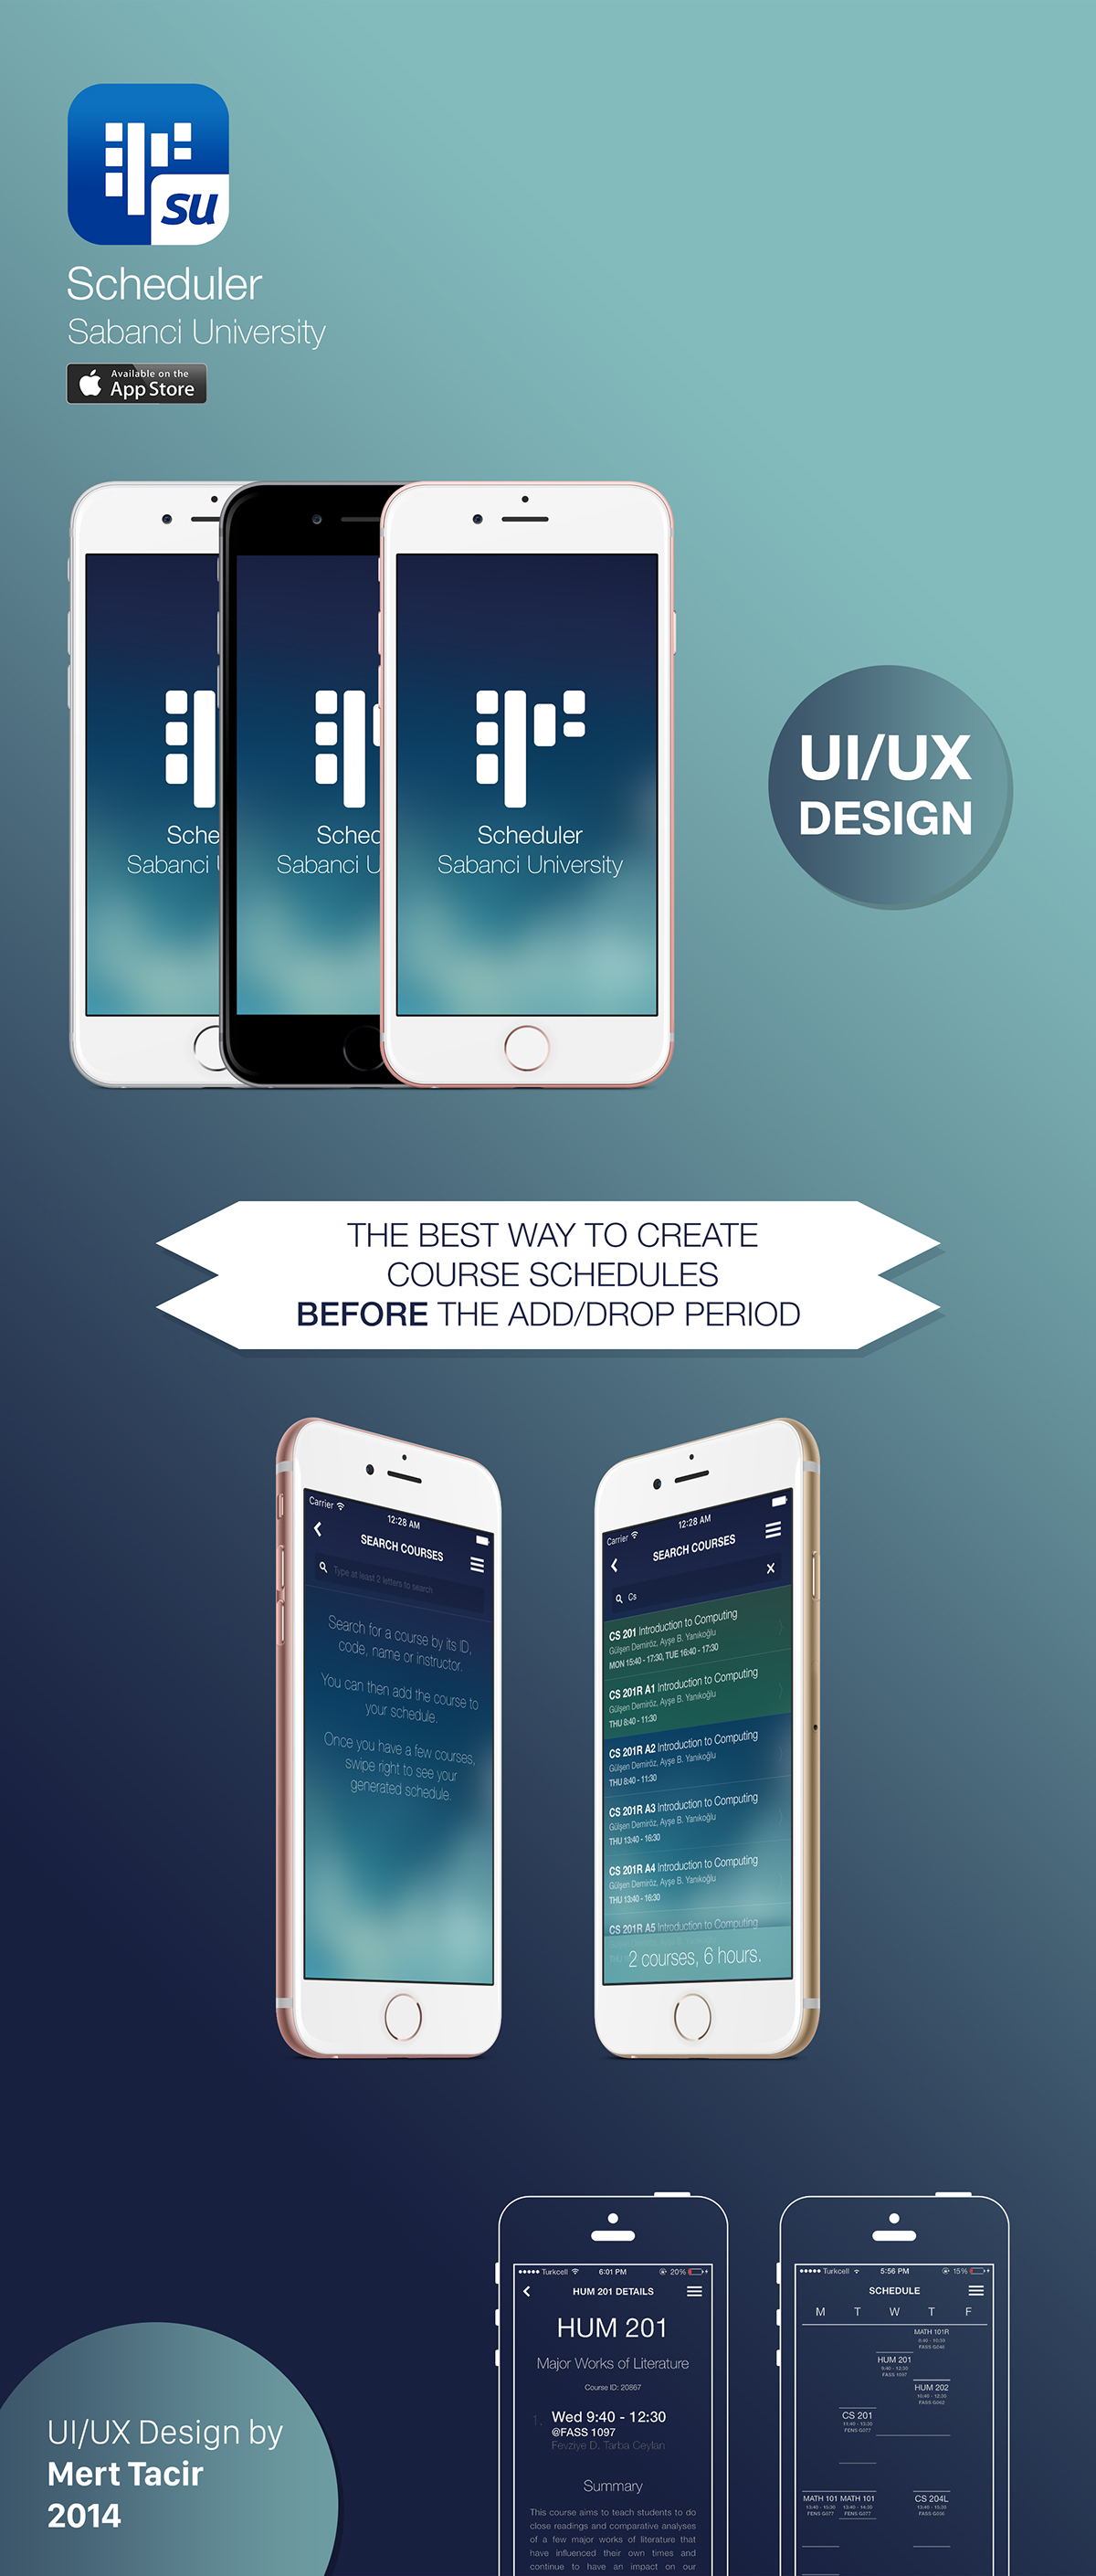 UI ux design user interface user interface design User Experience Design graphic design 